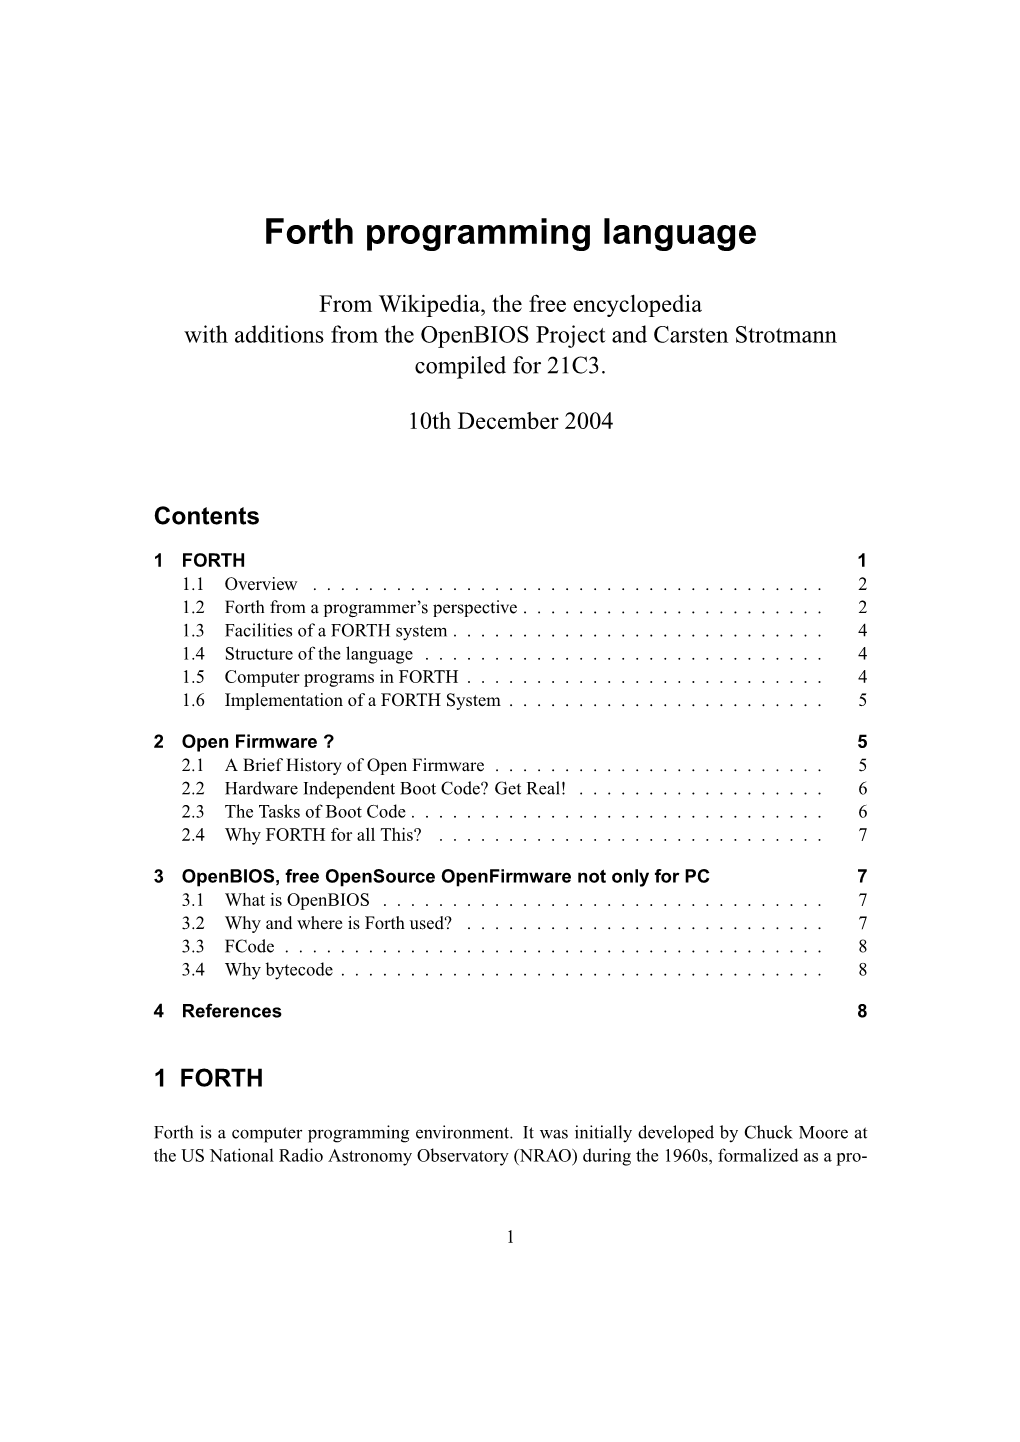 Forth Programming Language